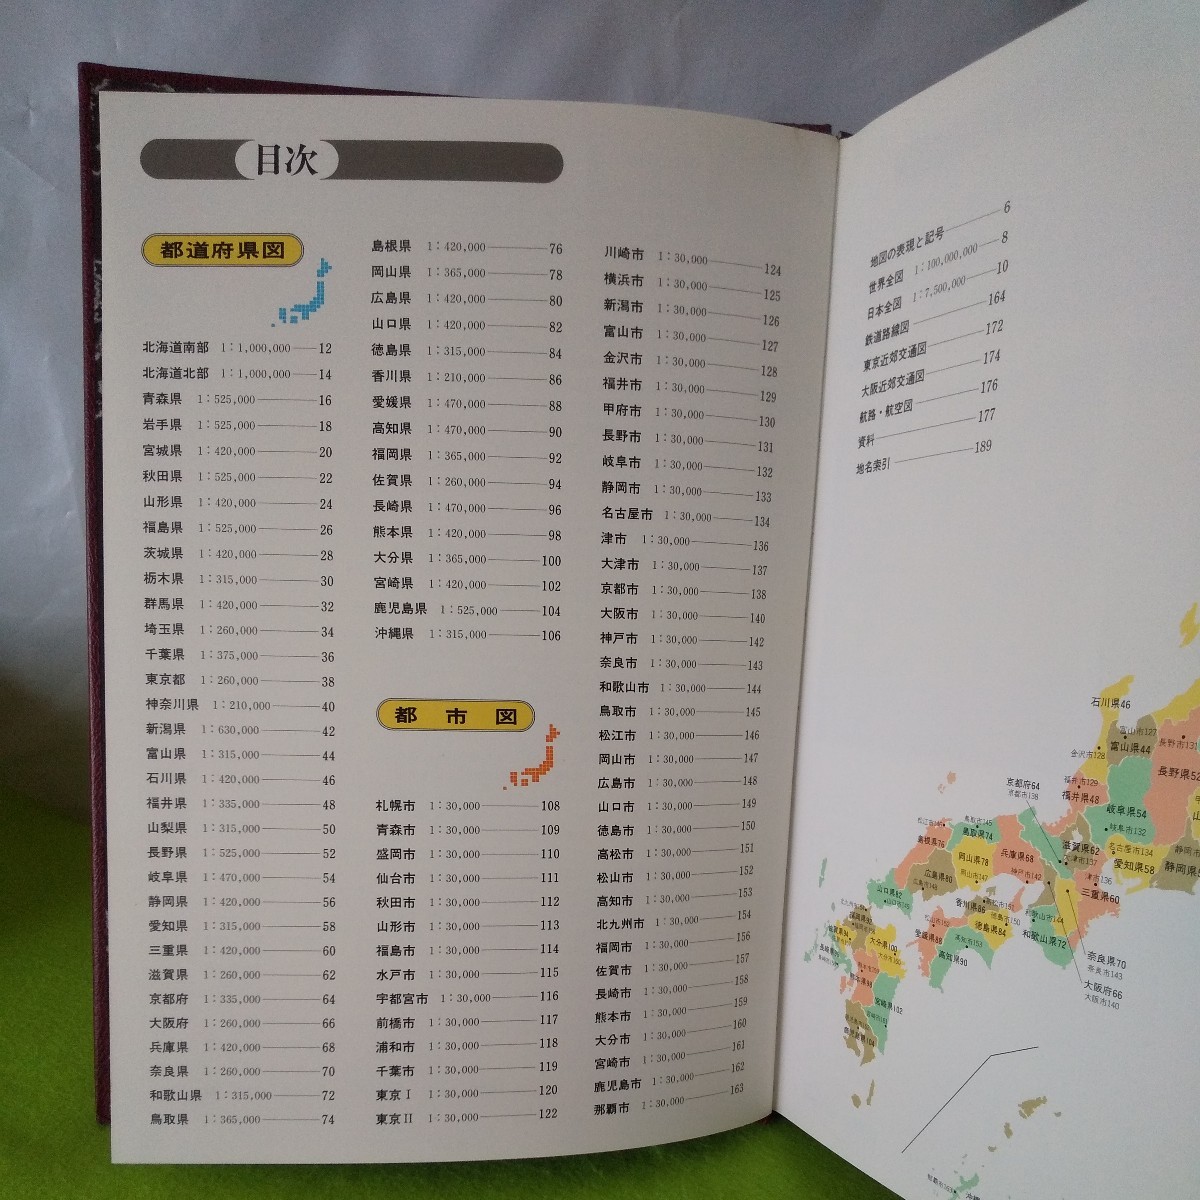 h-515 日本地図帳 JAPAN PREFECTURAL ATLAS 昭和58年9月第2刷発行 エアリアマップ 昭文社※2_画像2